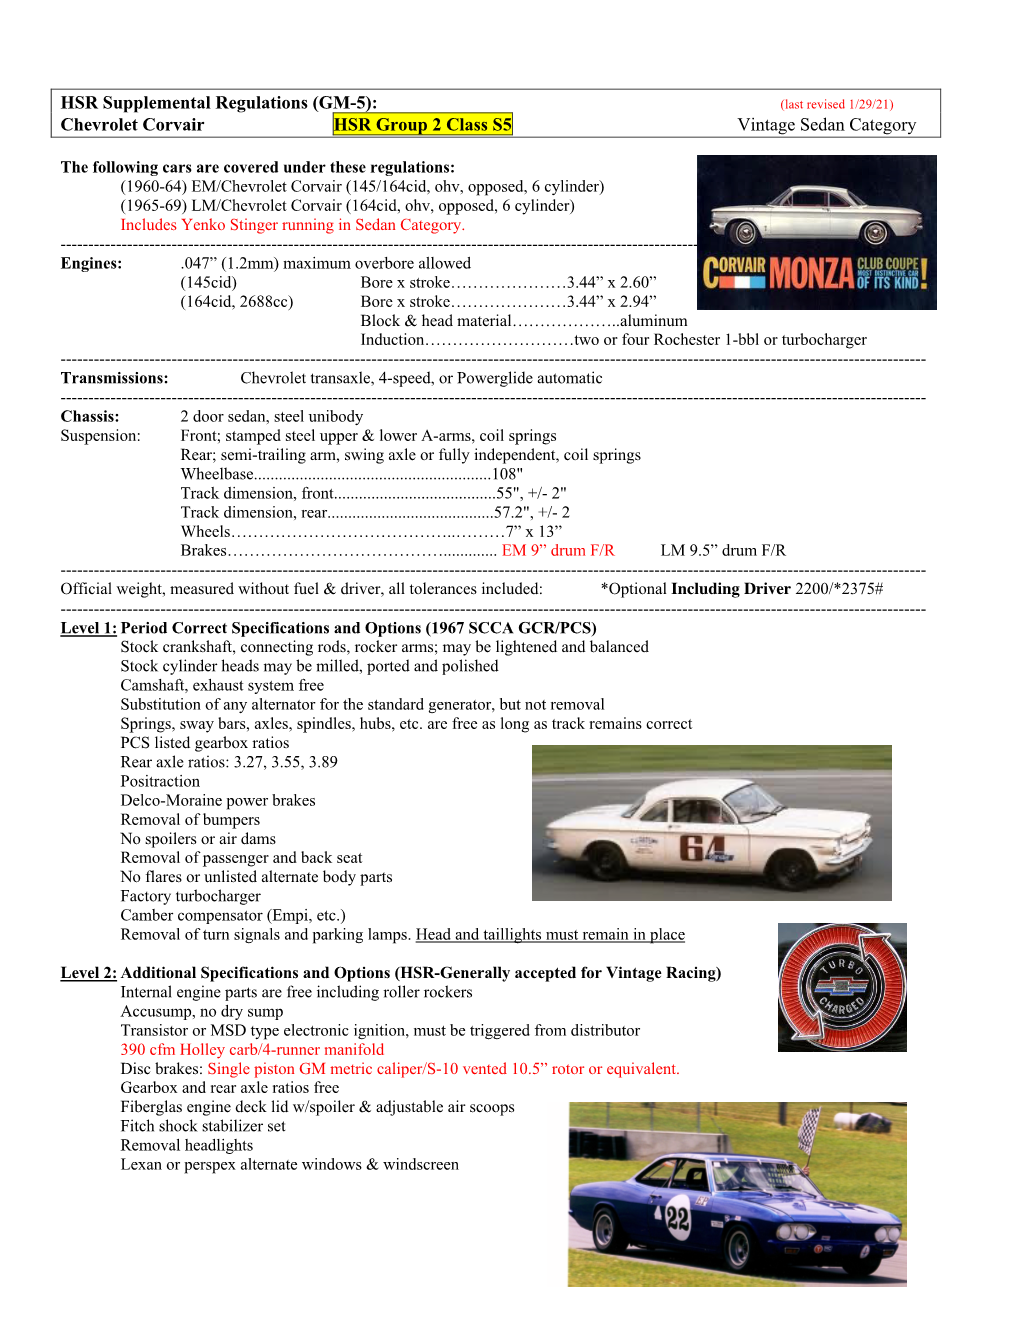 (GM-5) Chevrolet Corvair-HSR 2021